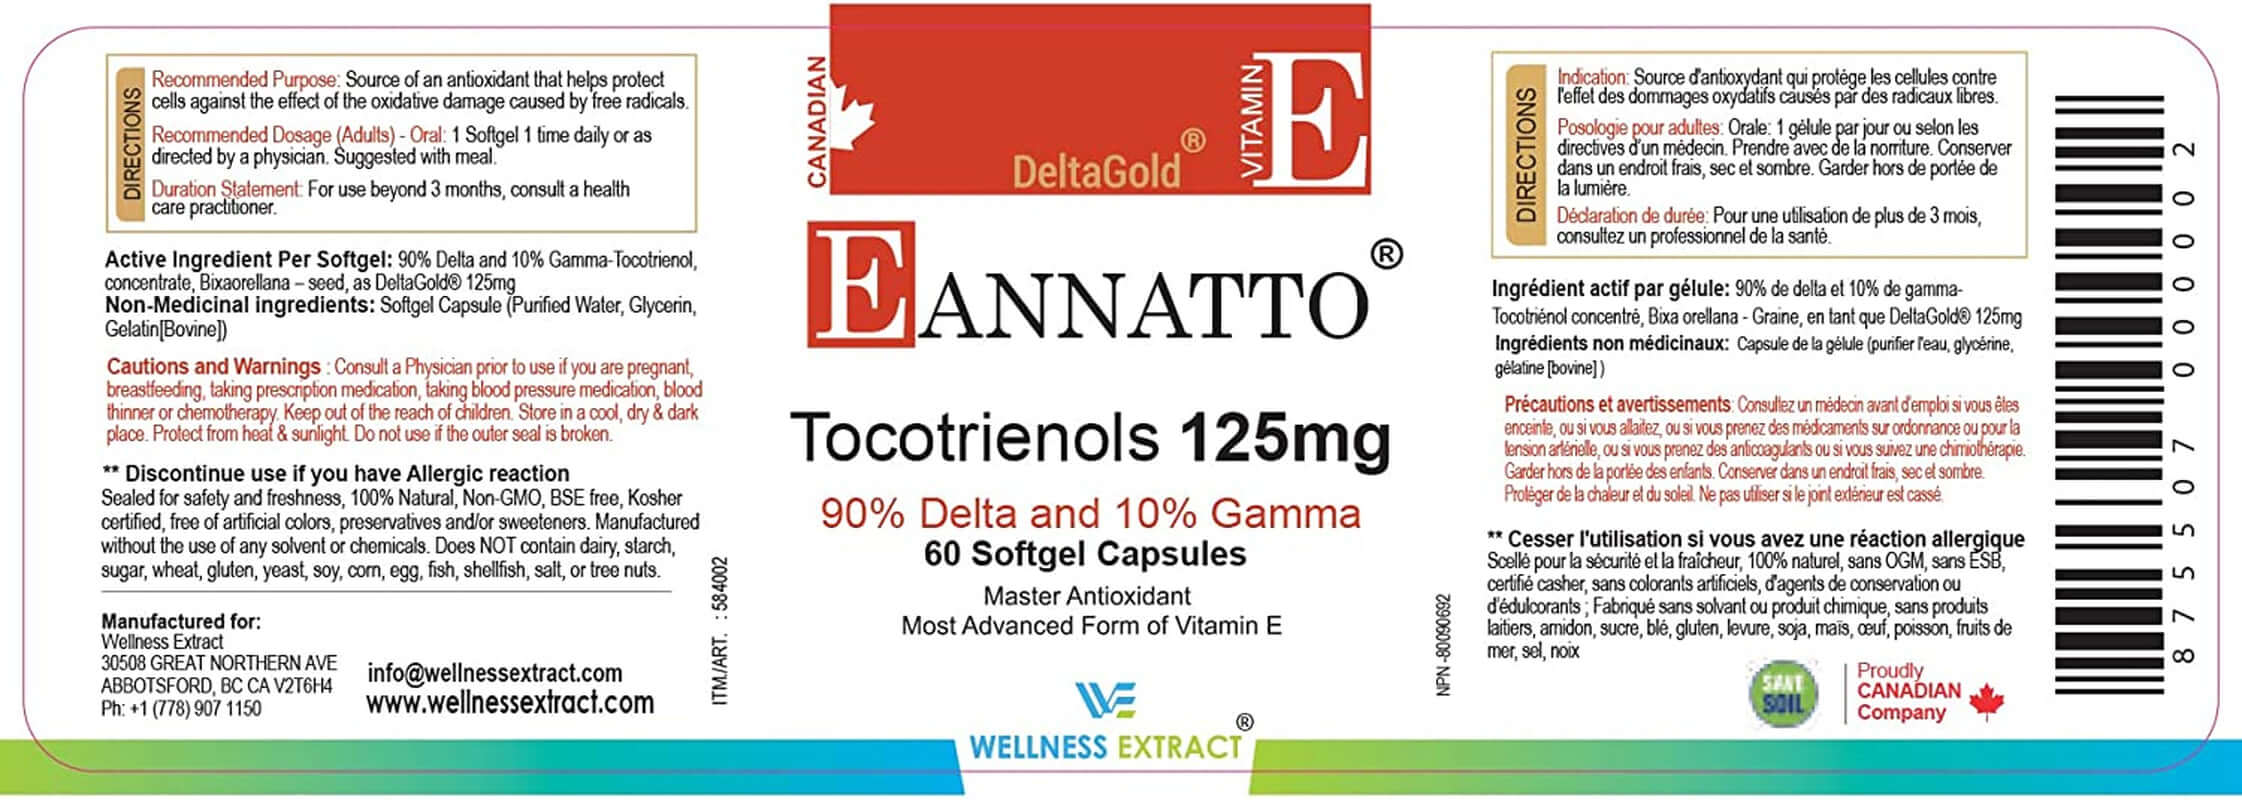 WELLNESS EXTRACT E Annatto Tocotrienols Deltagold 300Mg, Vitamin E Tocotrienols Supplements 60 Softgel Capsules, Tocopherol Free, Supports Immune Health & Antioxidant Health (90% Delta & 10% Gamma). - vitamenstore.com